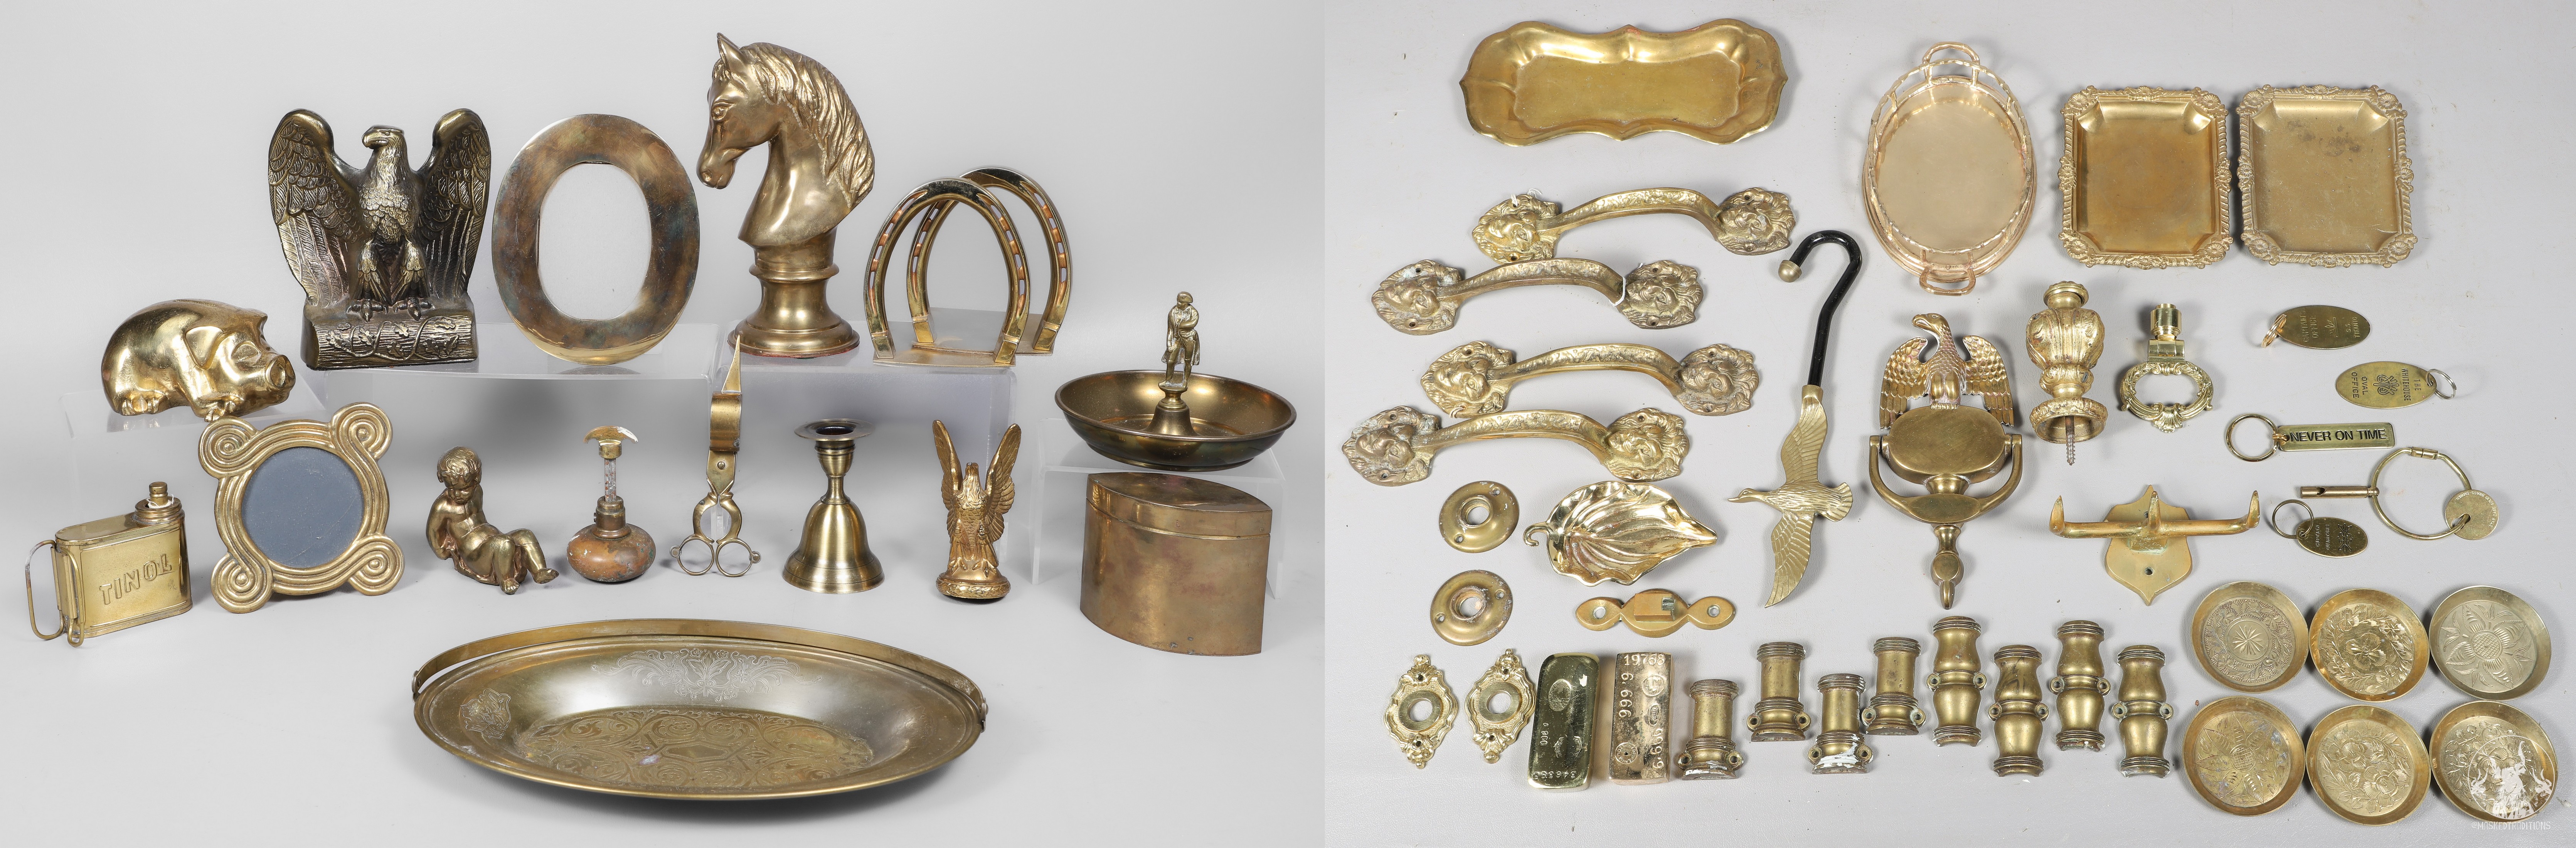 Brass hardware, decorative items